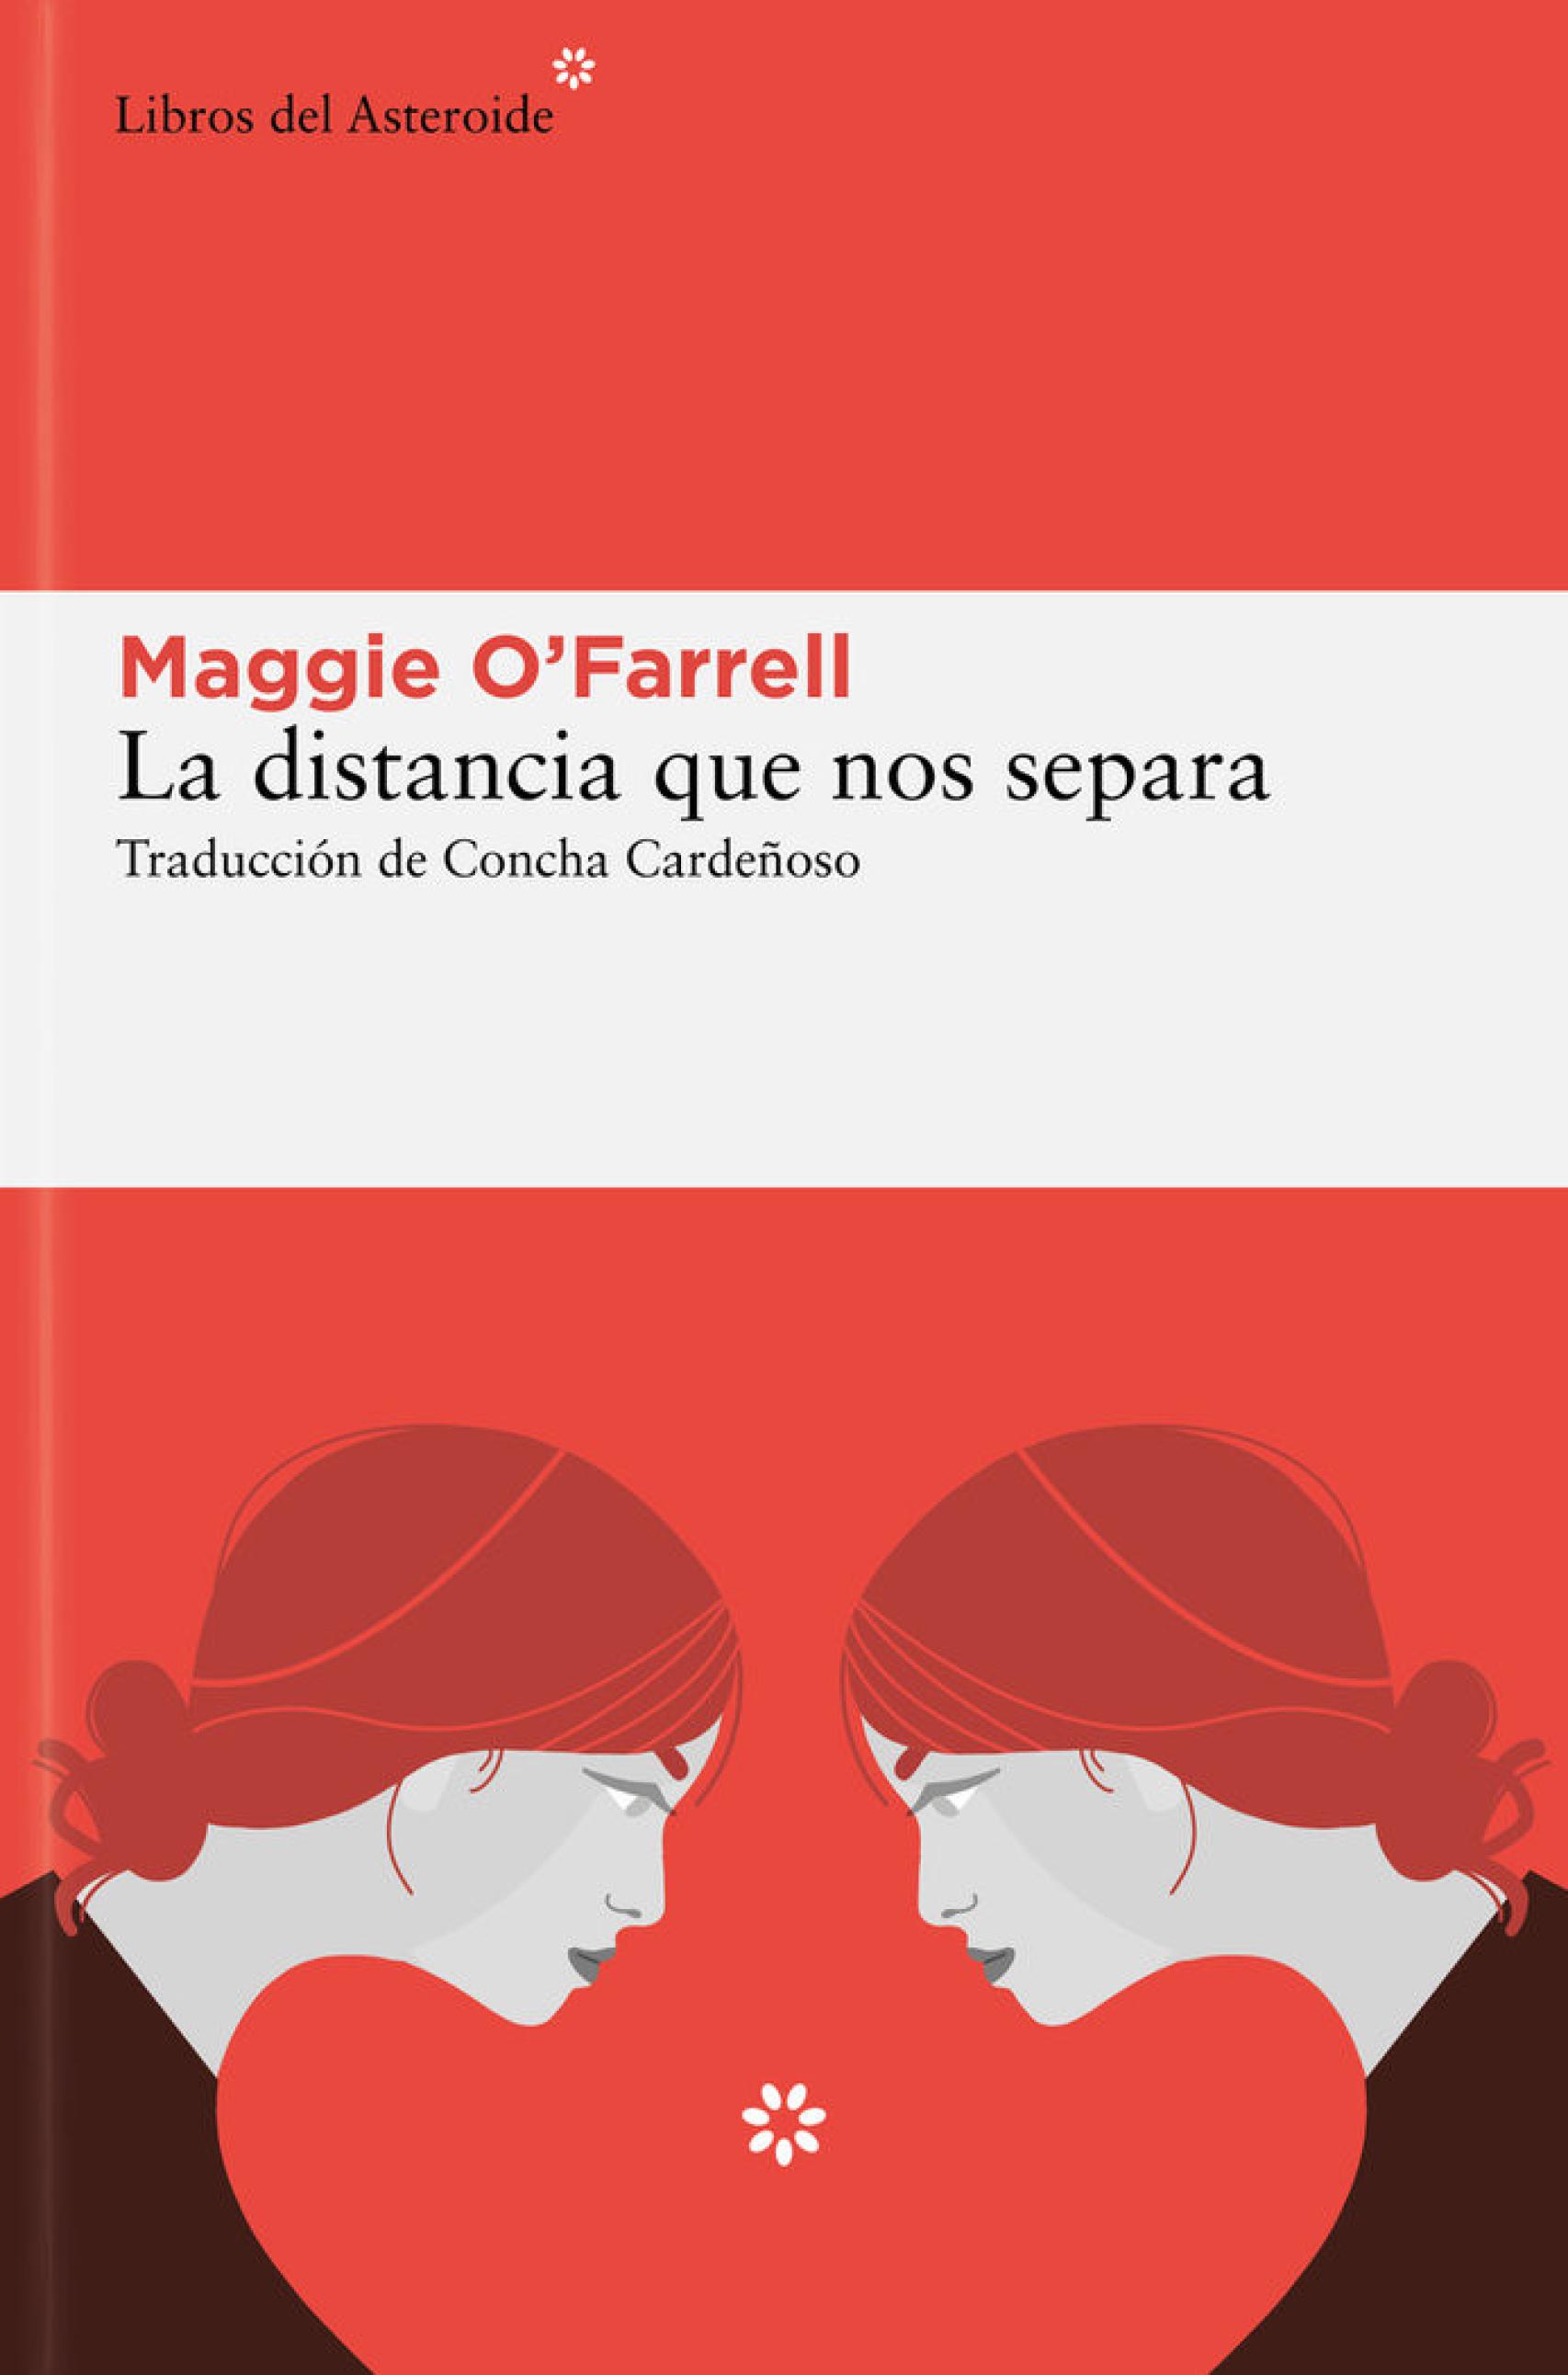 El blog de Juan Carlos: El retrato de casada de Maggie O'Farrell